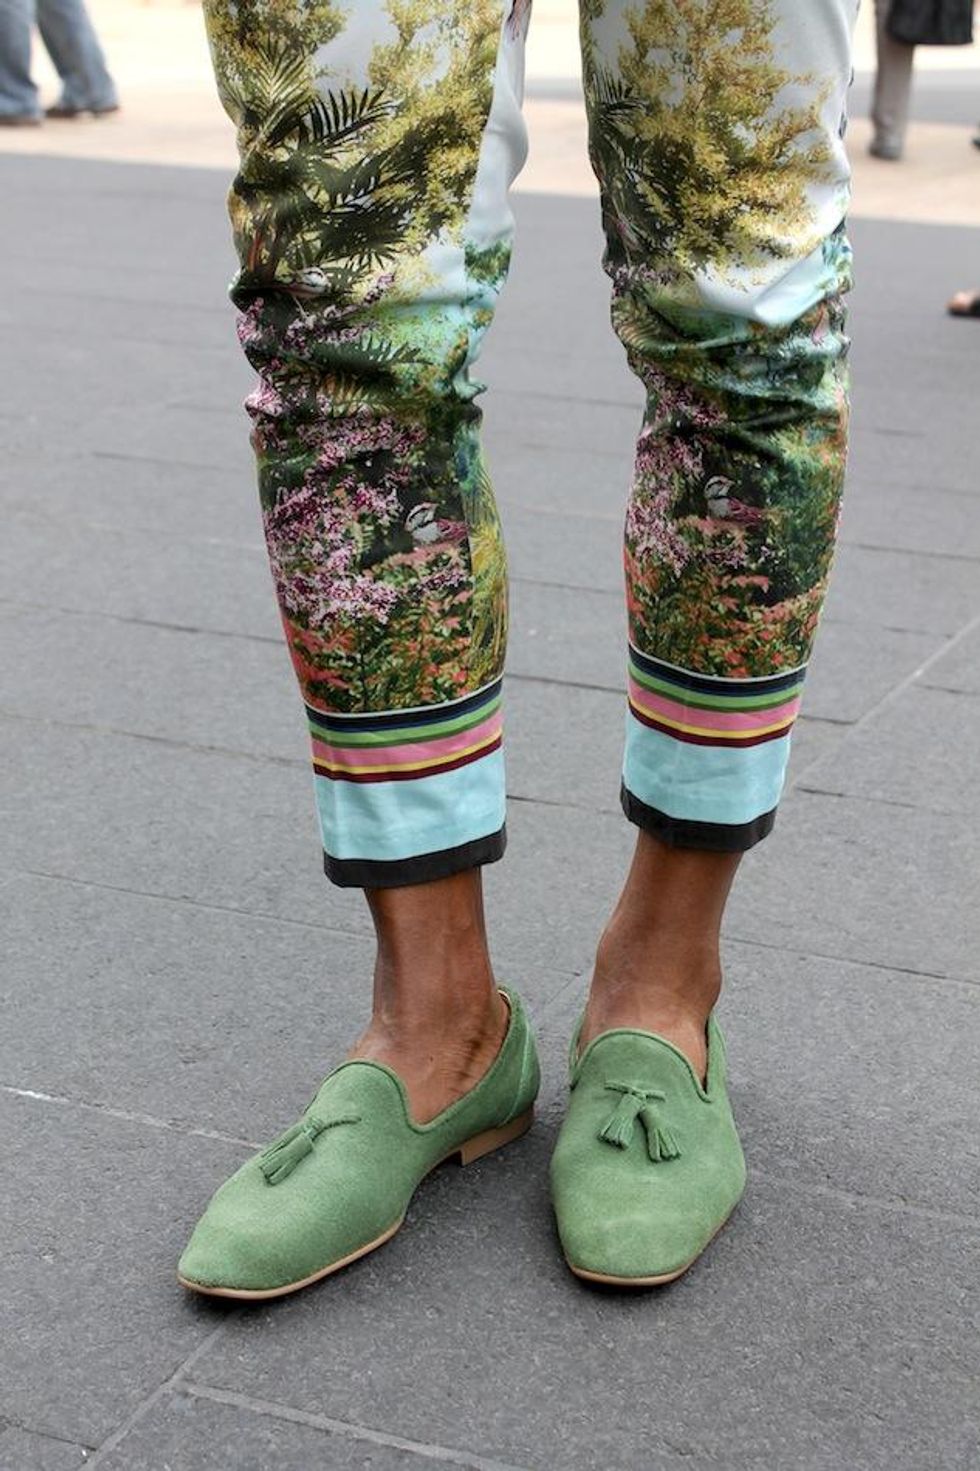 Fashion-week-street-style-color-pants-andrew-villagomez-6